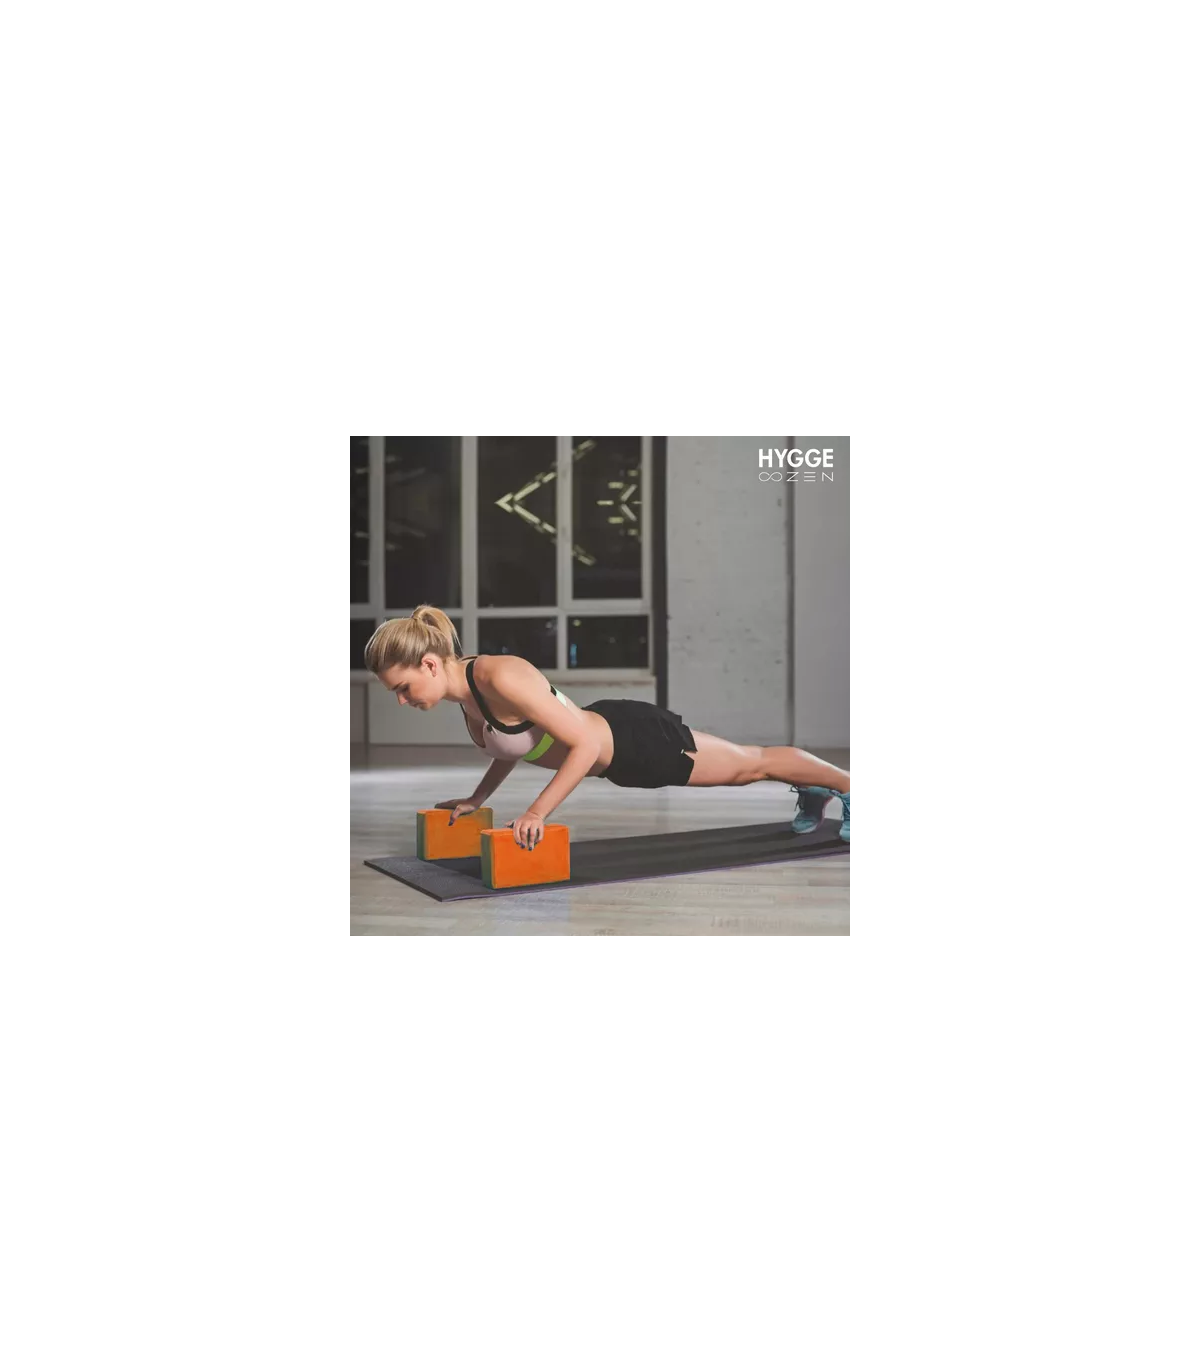 Ladrillo Yoga Pilates Fitness Gym Brick Taco Bloque Goma Eva